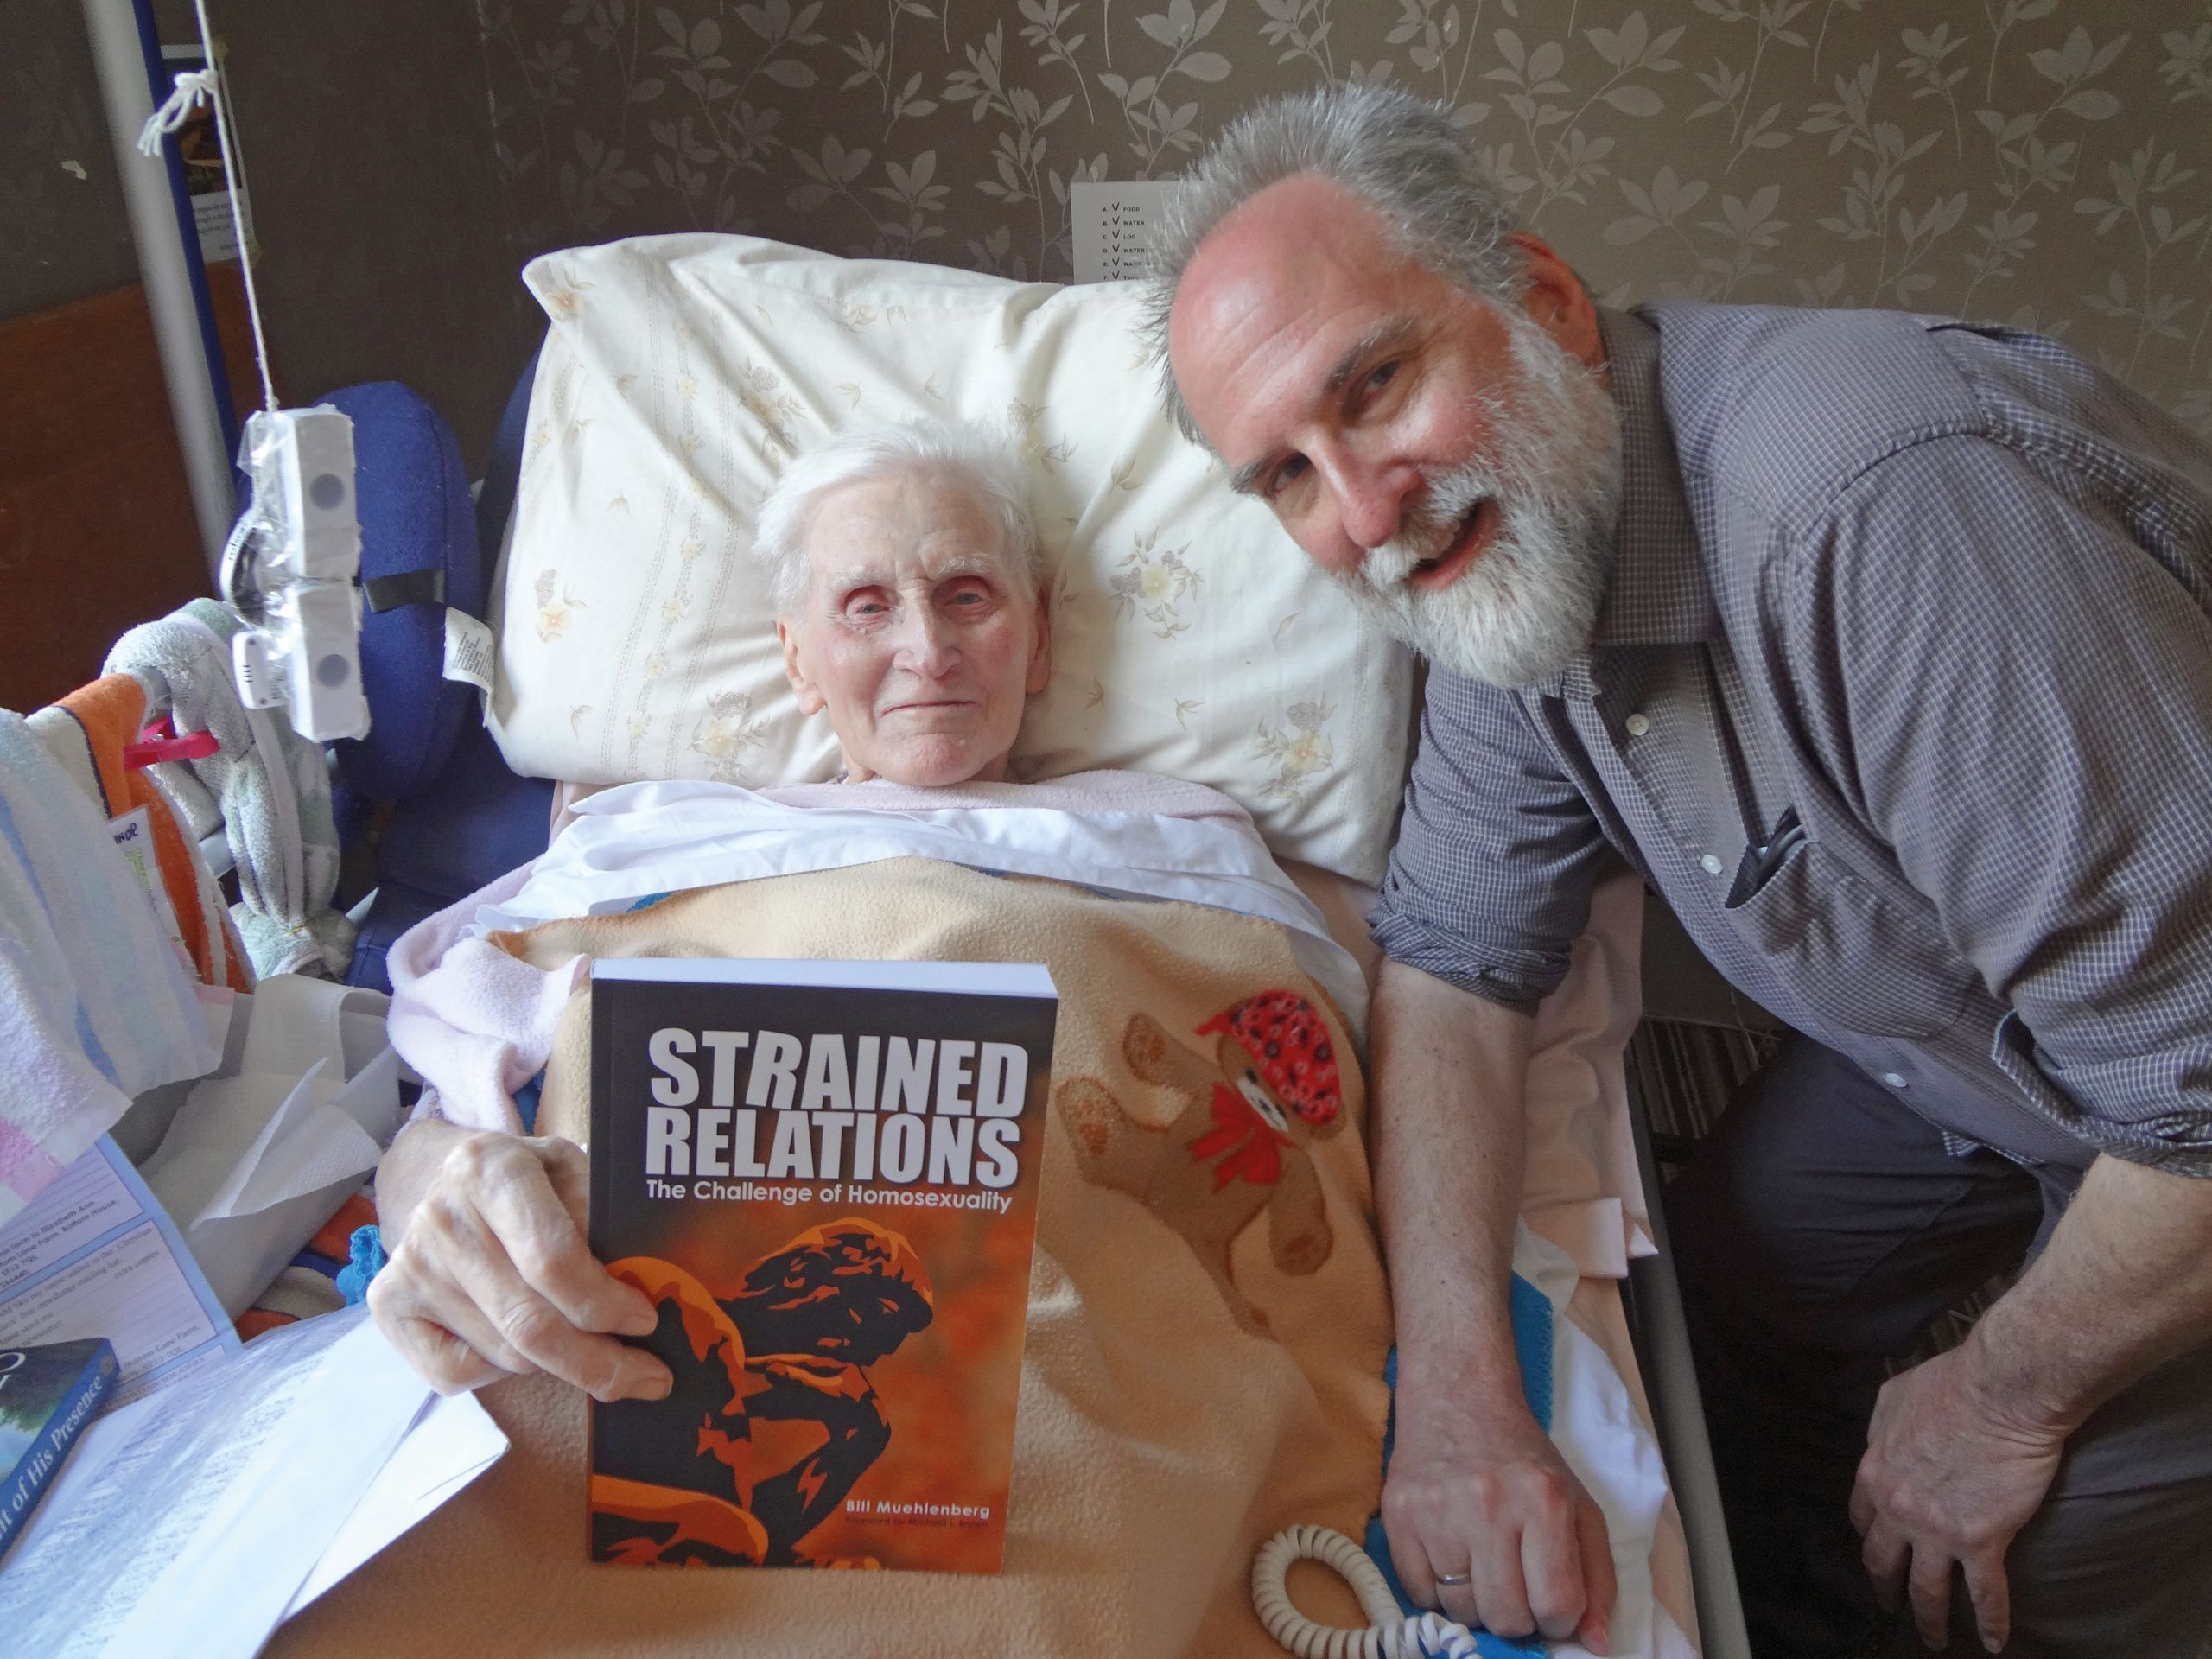 Author Bill Muehlenberg with bedridden campaigner Steve Stevens